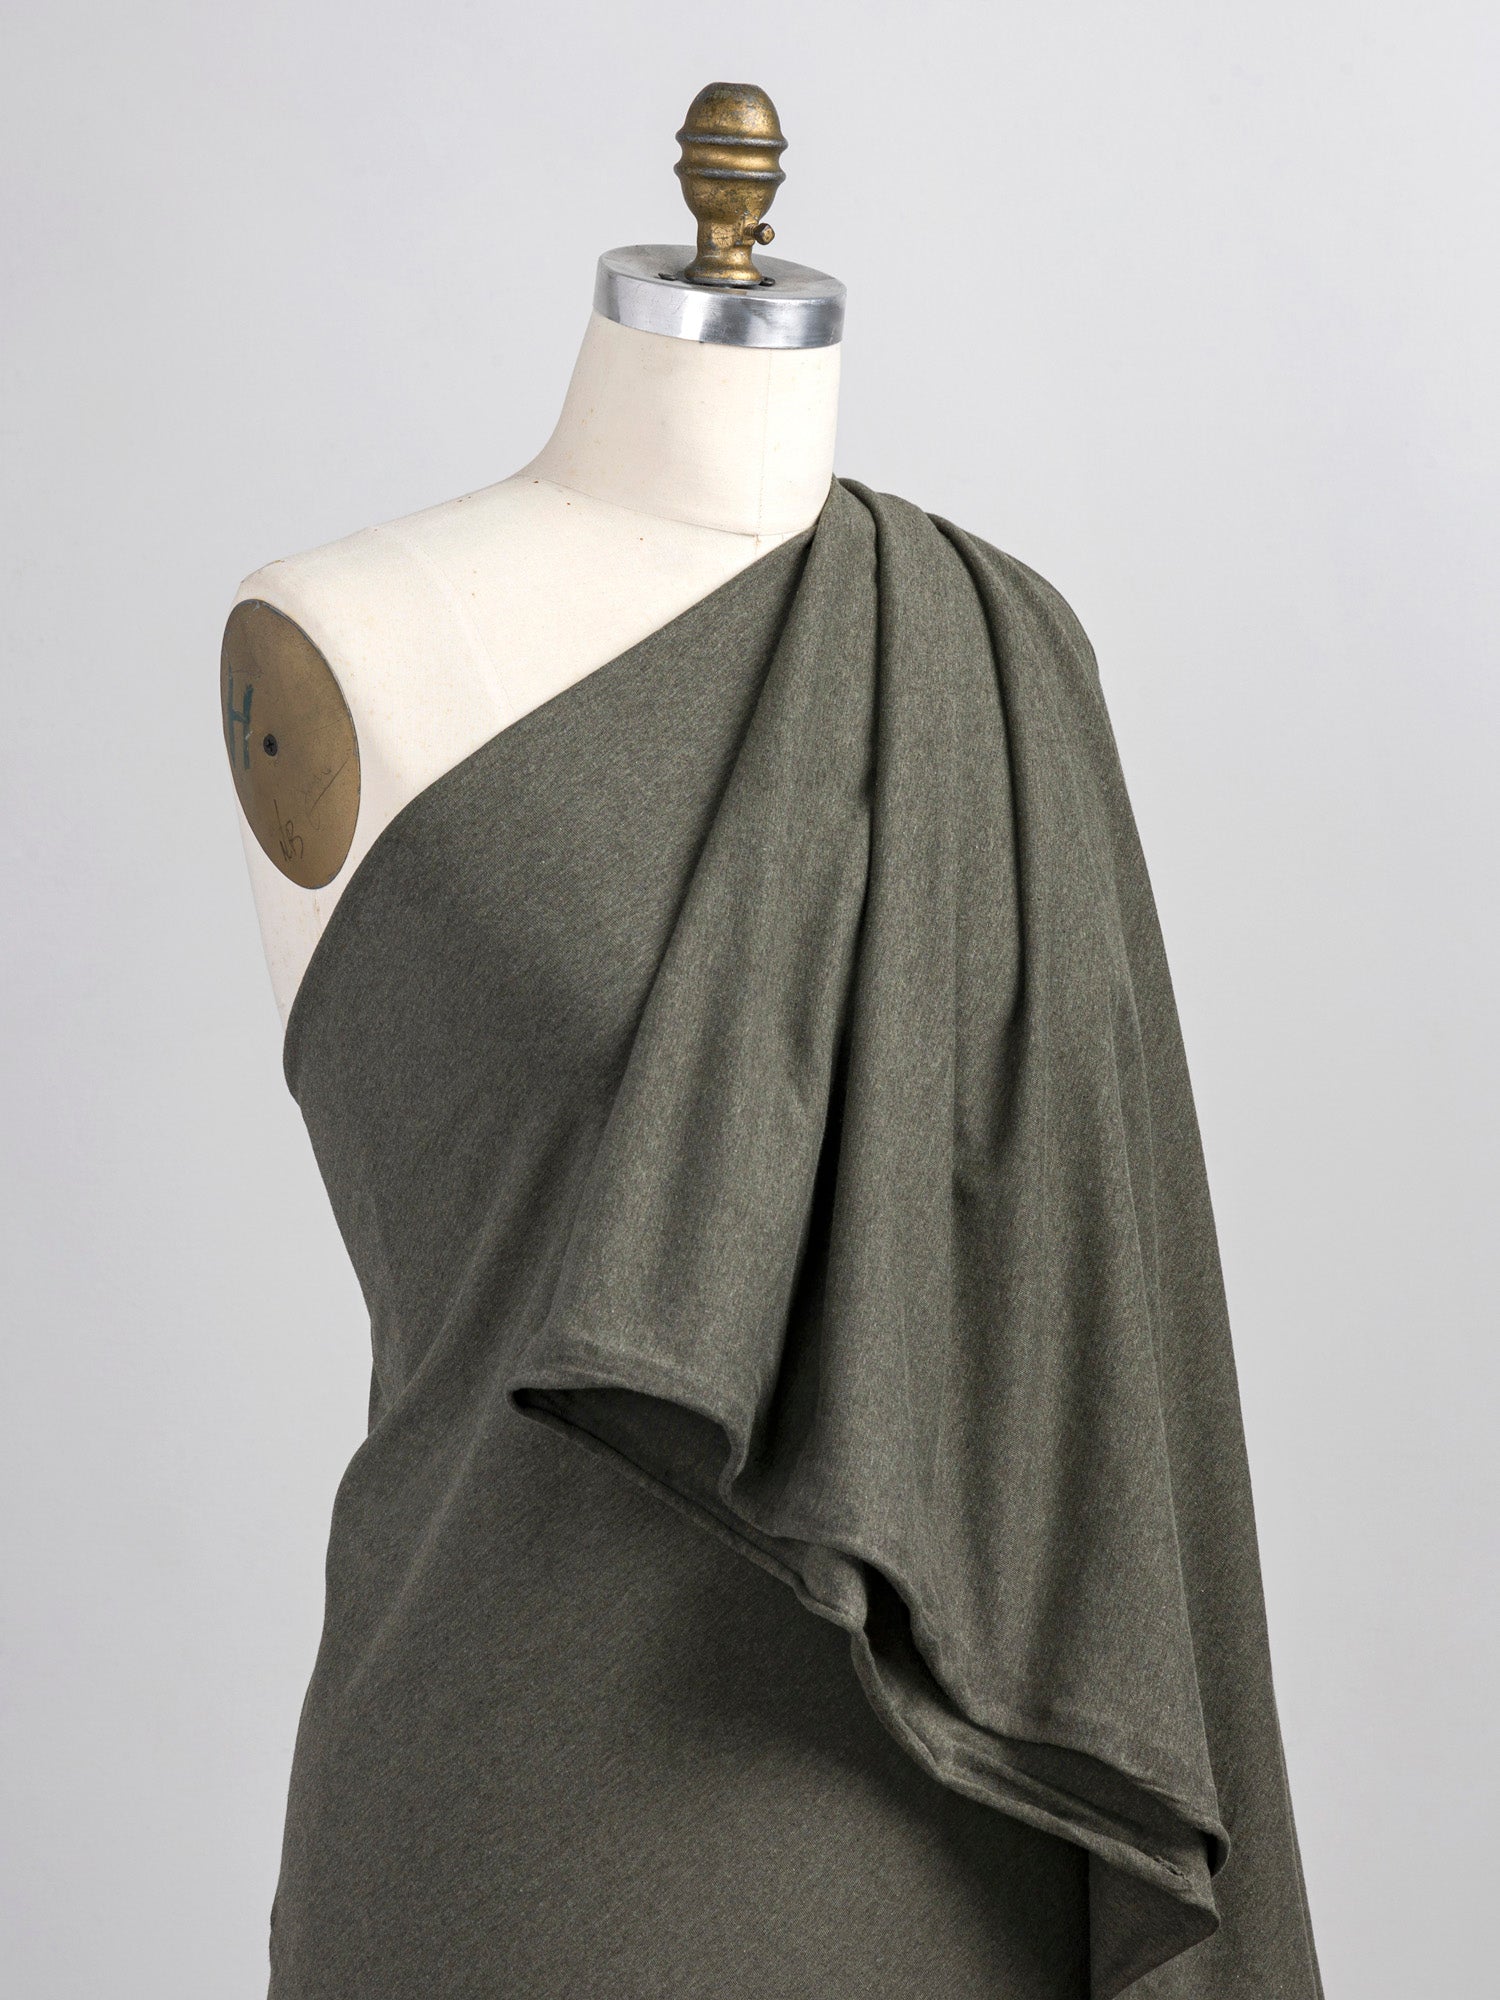 Organic Cotton Spandex Stretch Jersey Knit - Heather Olive | Core Fabrics